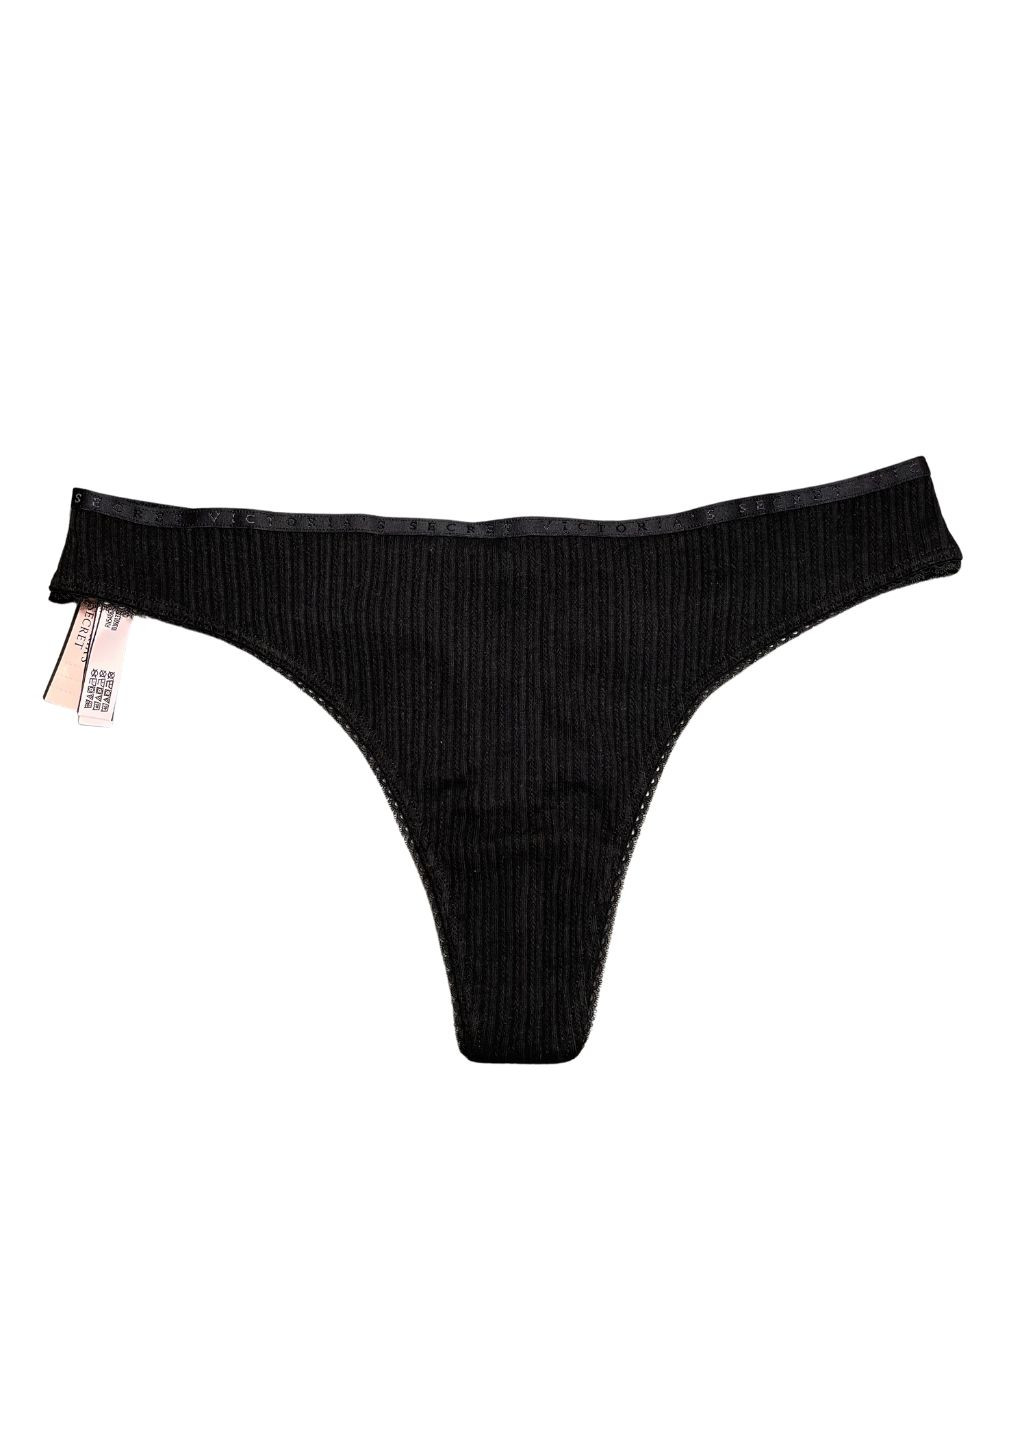 Трусики с украшением в виде серца на поясе сзади Victoria's Secret cotton & rhinestone detail thong panty (267723017)